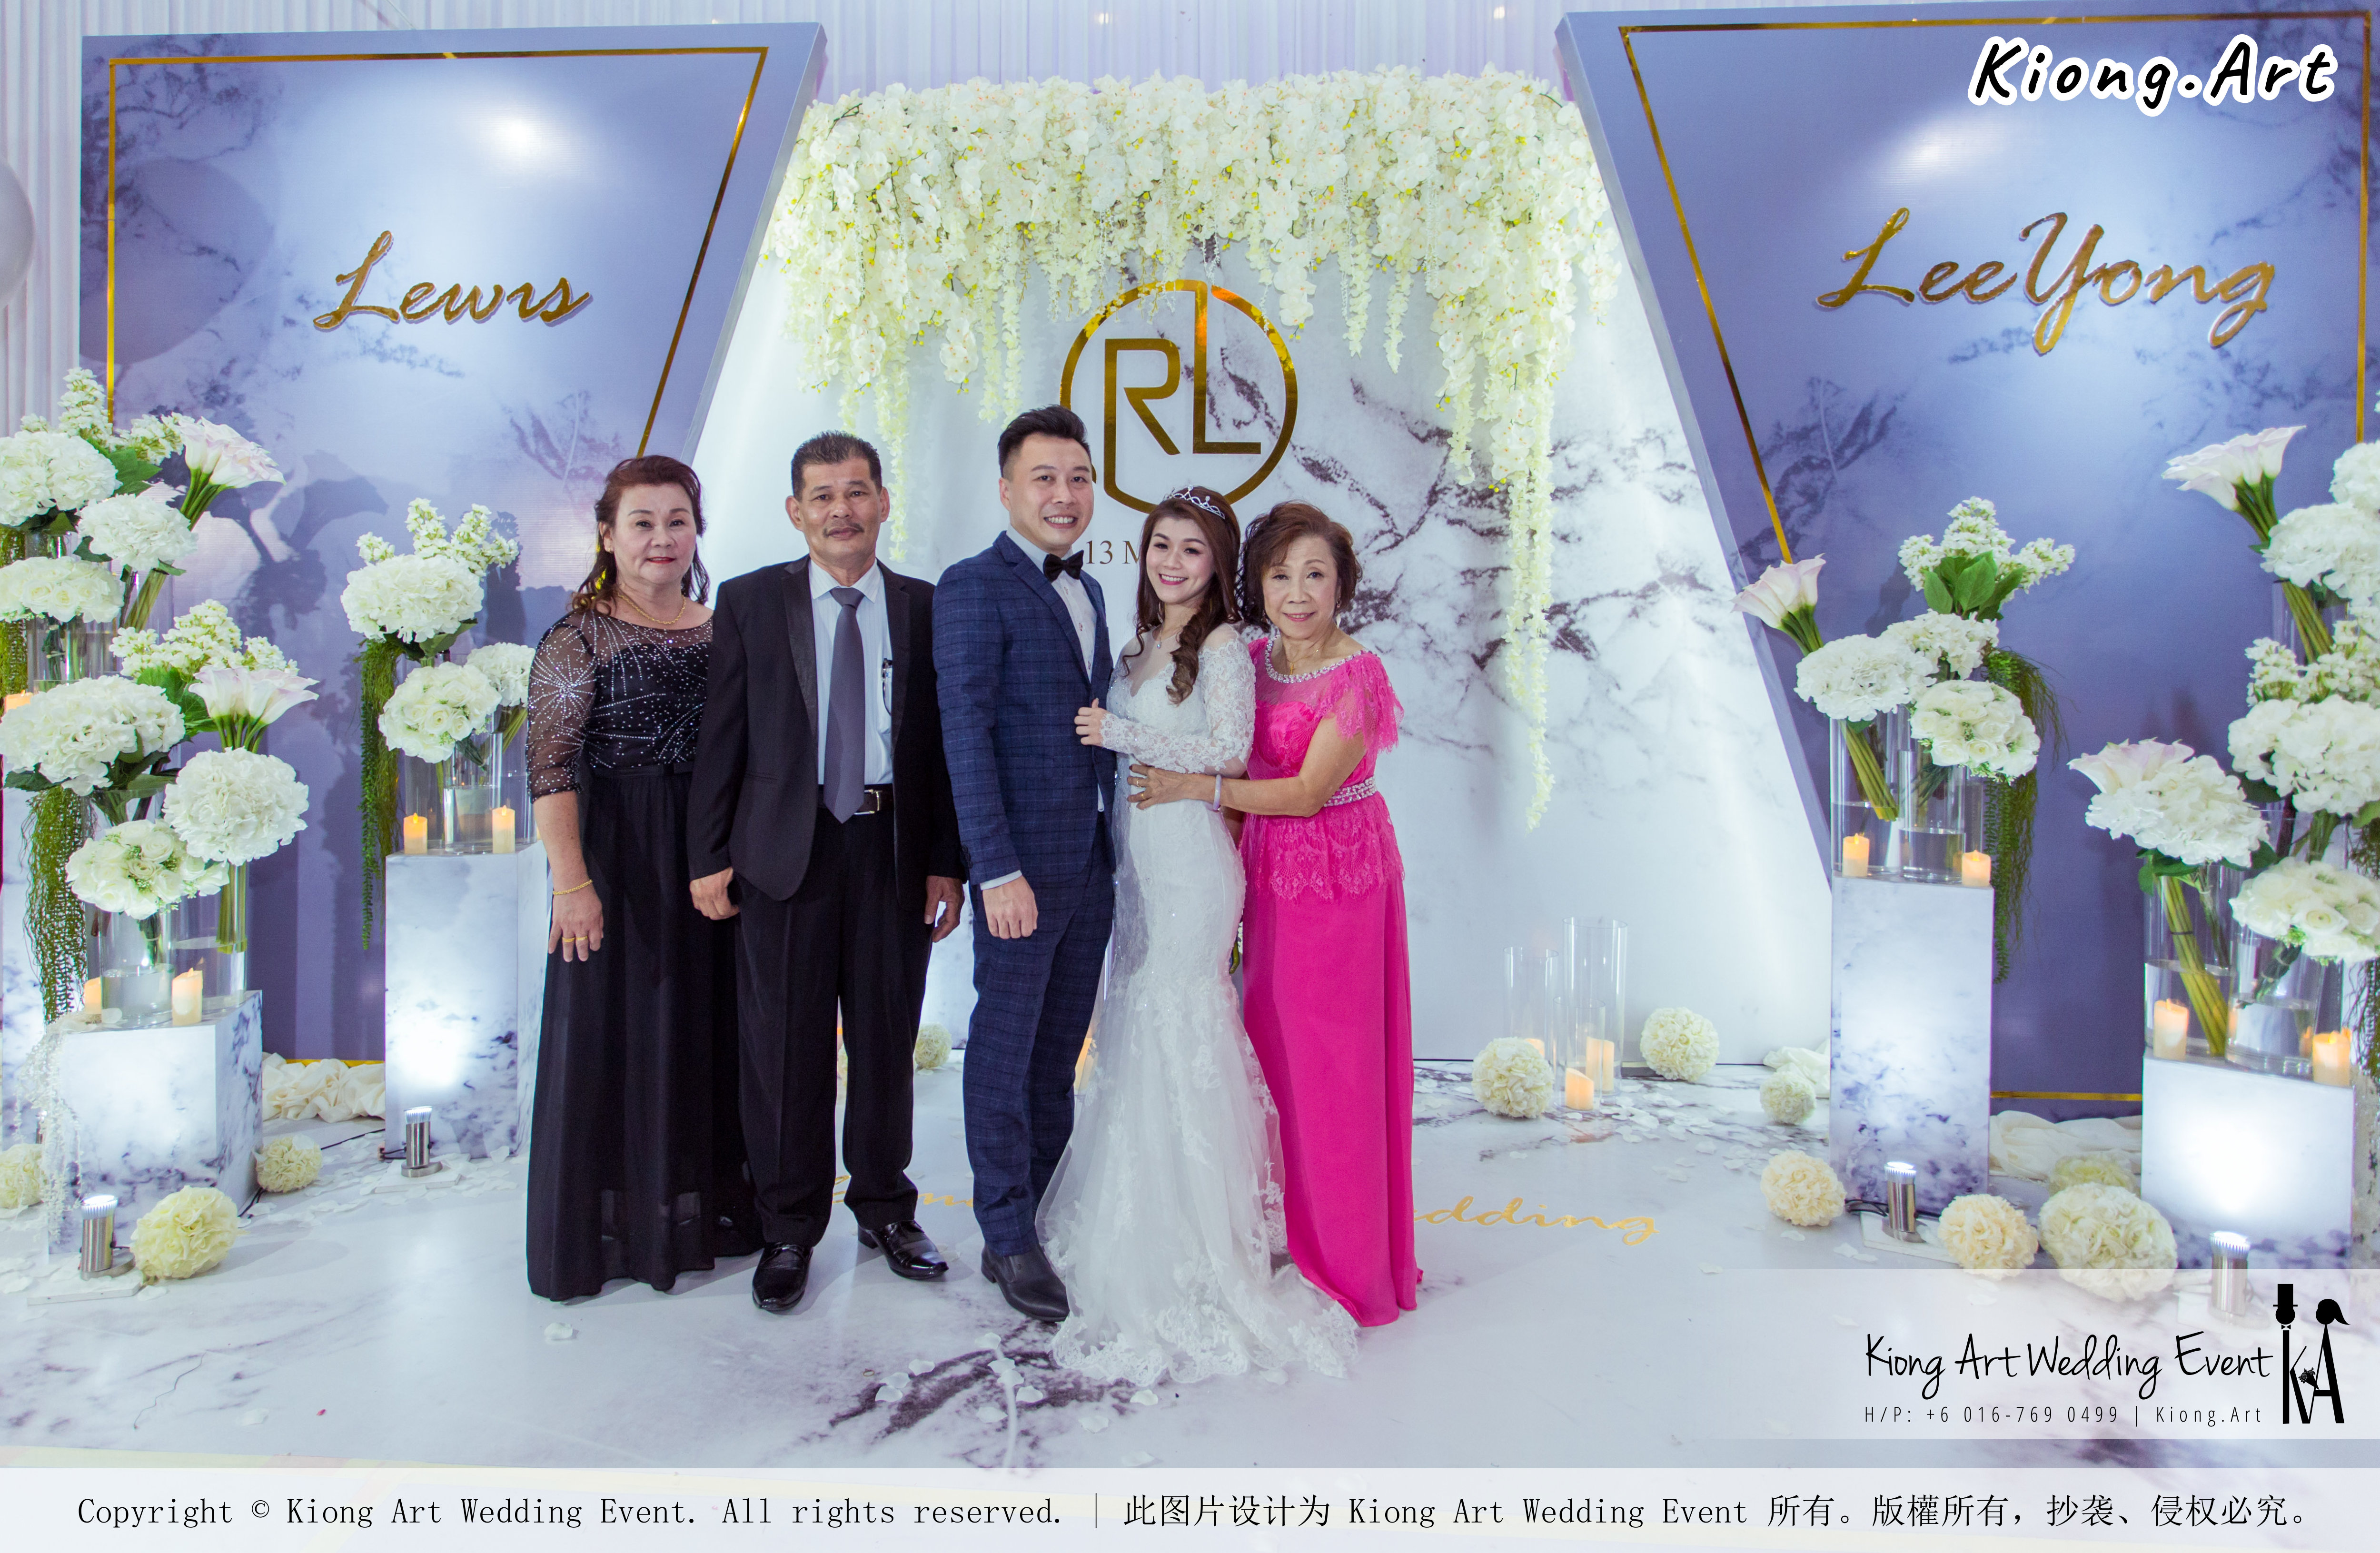 Kiong Art Wedding Event Kuala Lumpur Malaysia Event and Wedding DecorationCompany One-stop Wedding Planning Services Wedding Theme Live Band Wedding Photography Videography A03-56